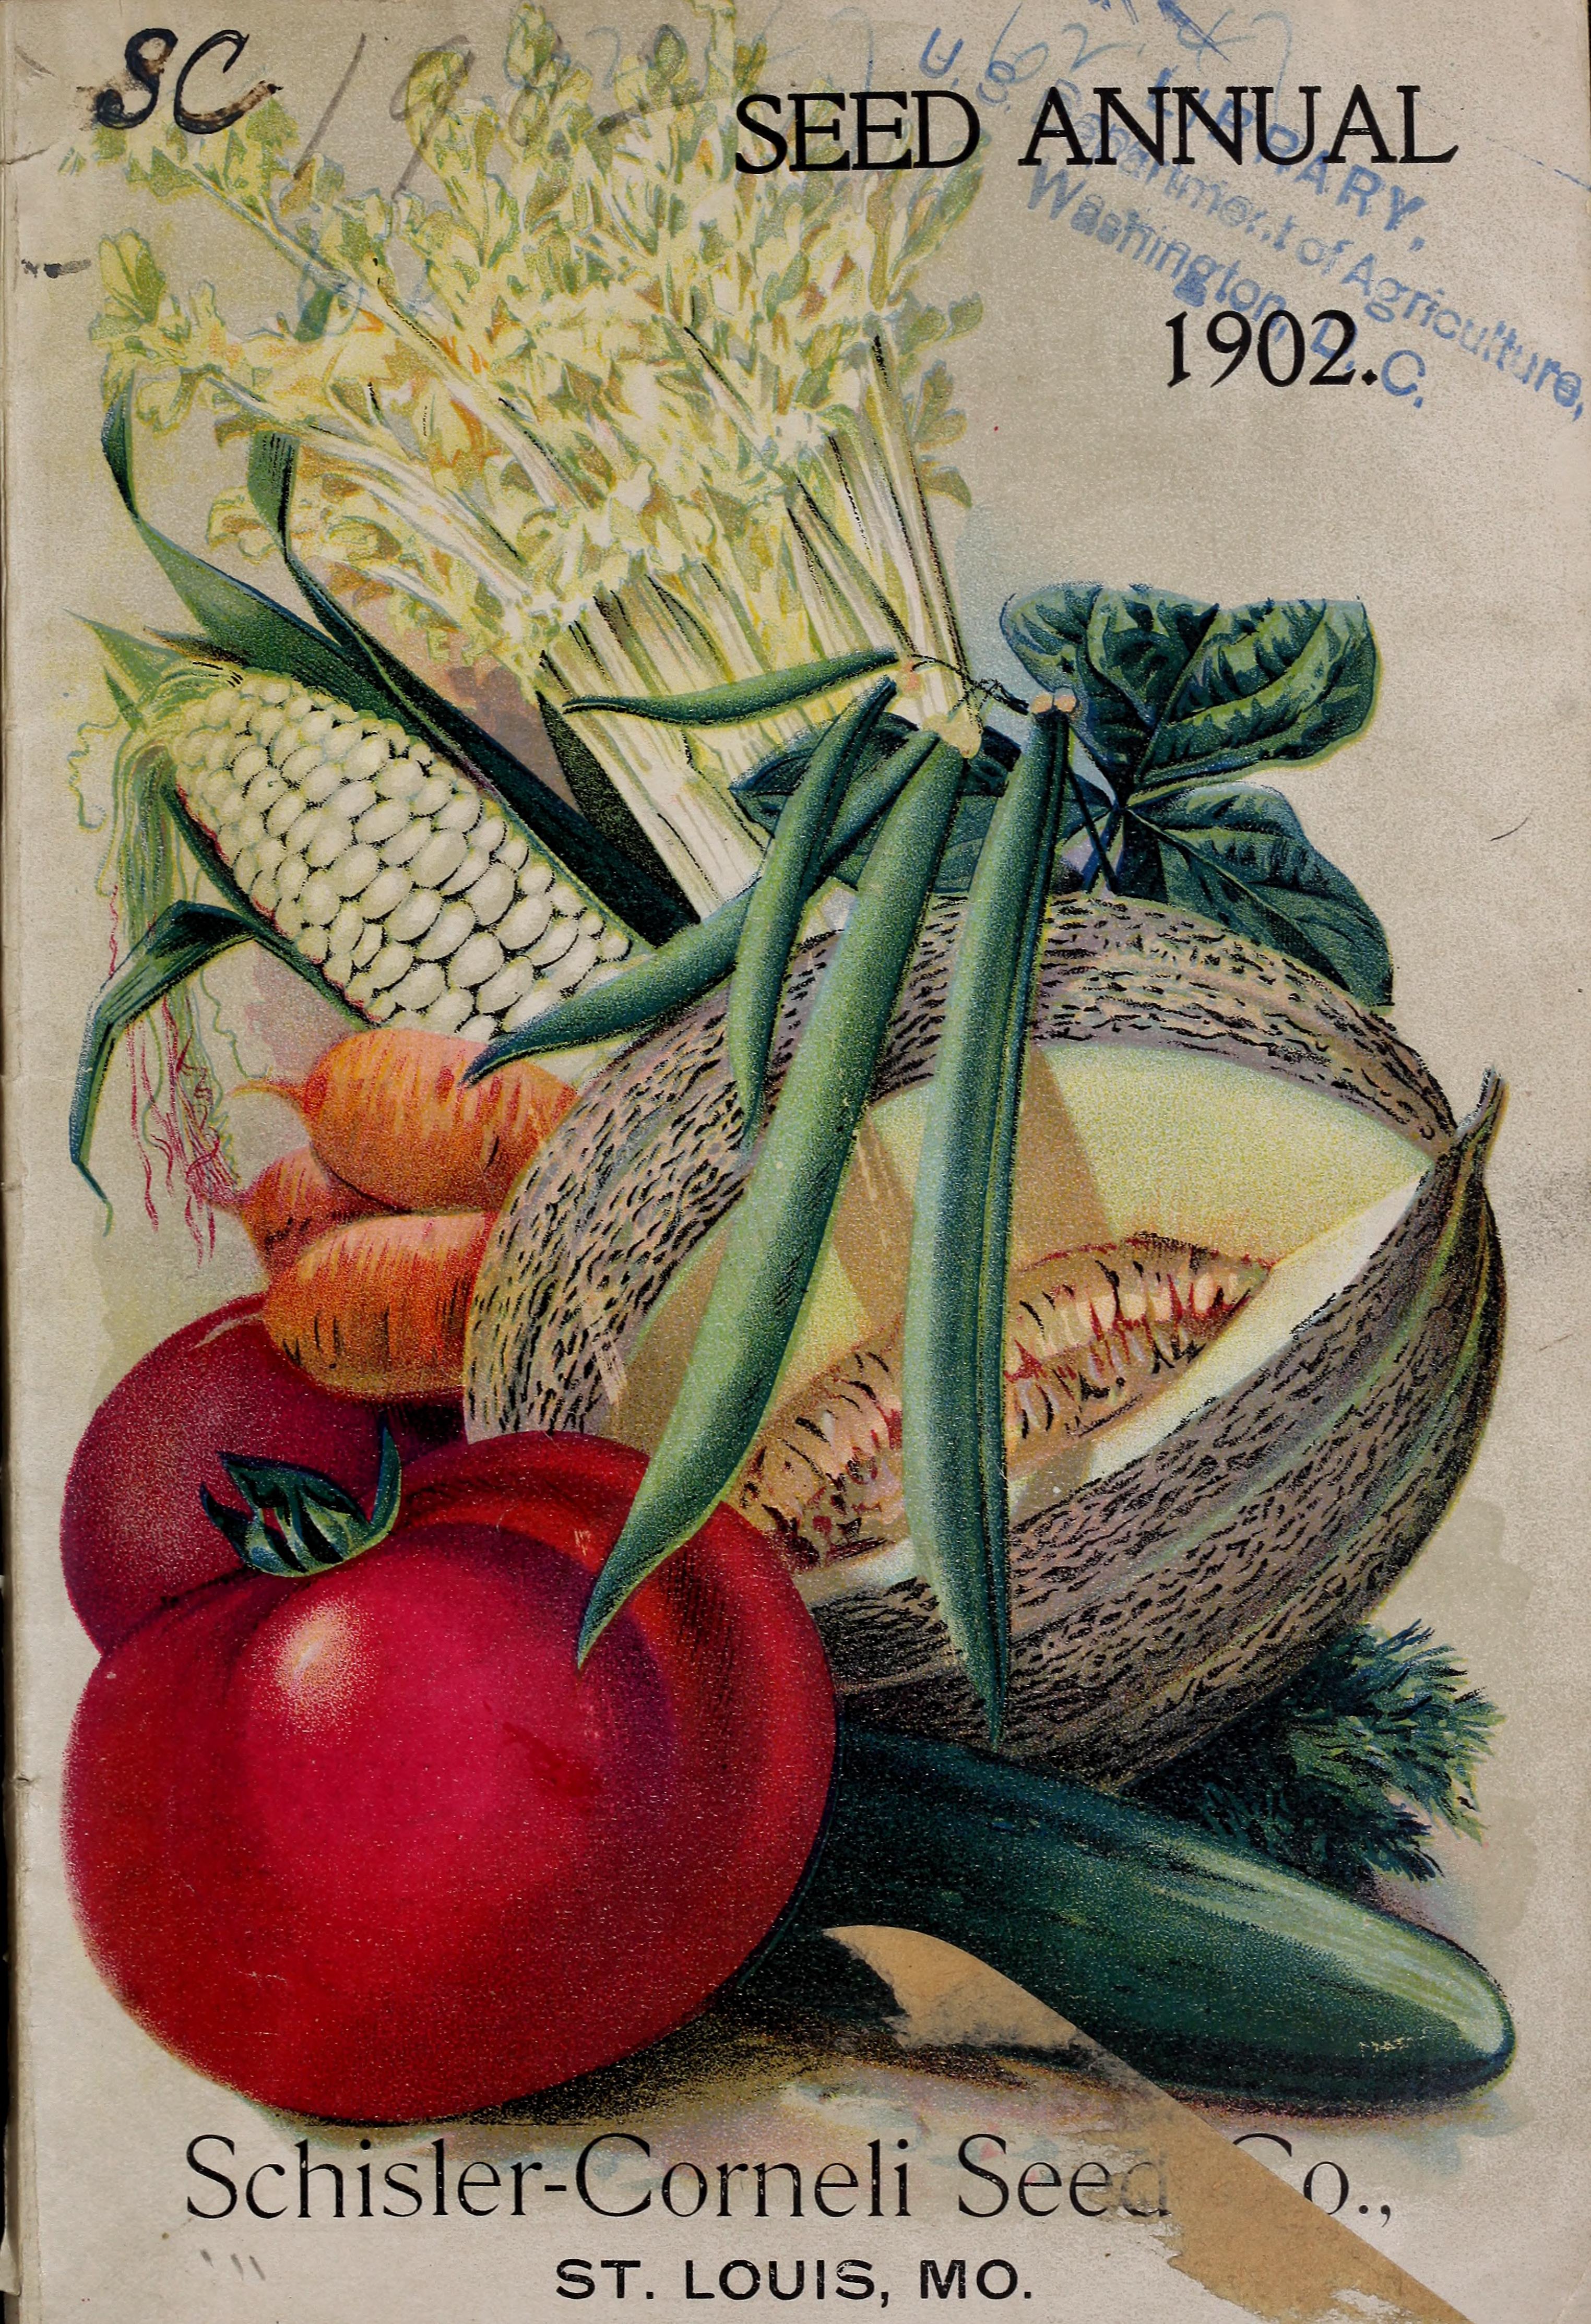 Schisler-Corneli Seed Co. Seed Annual 1902 cover